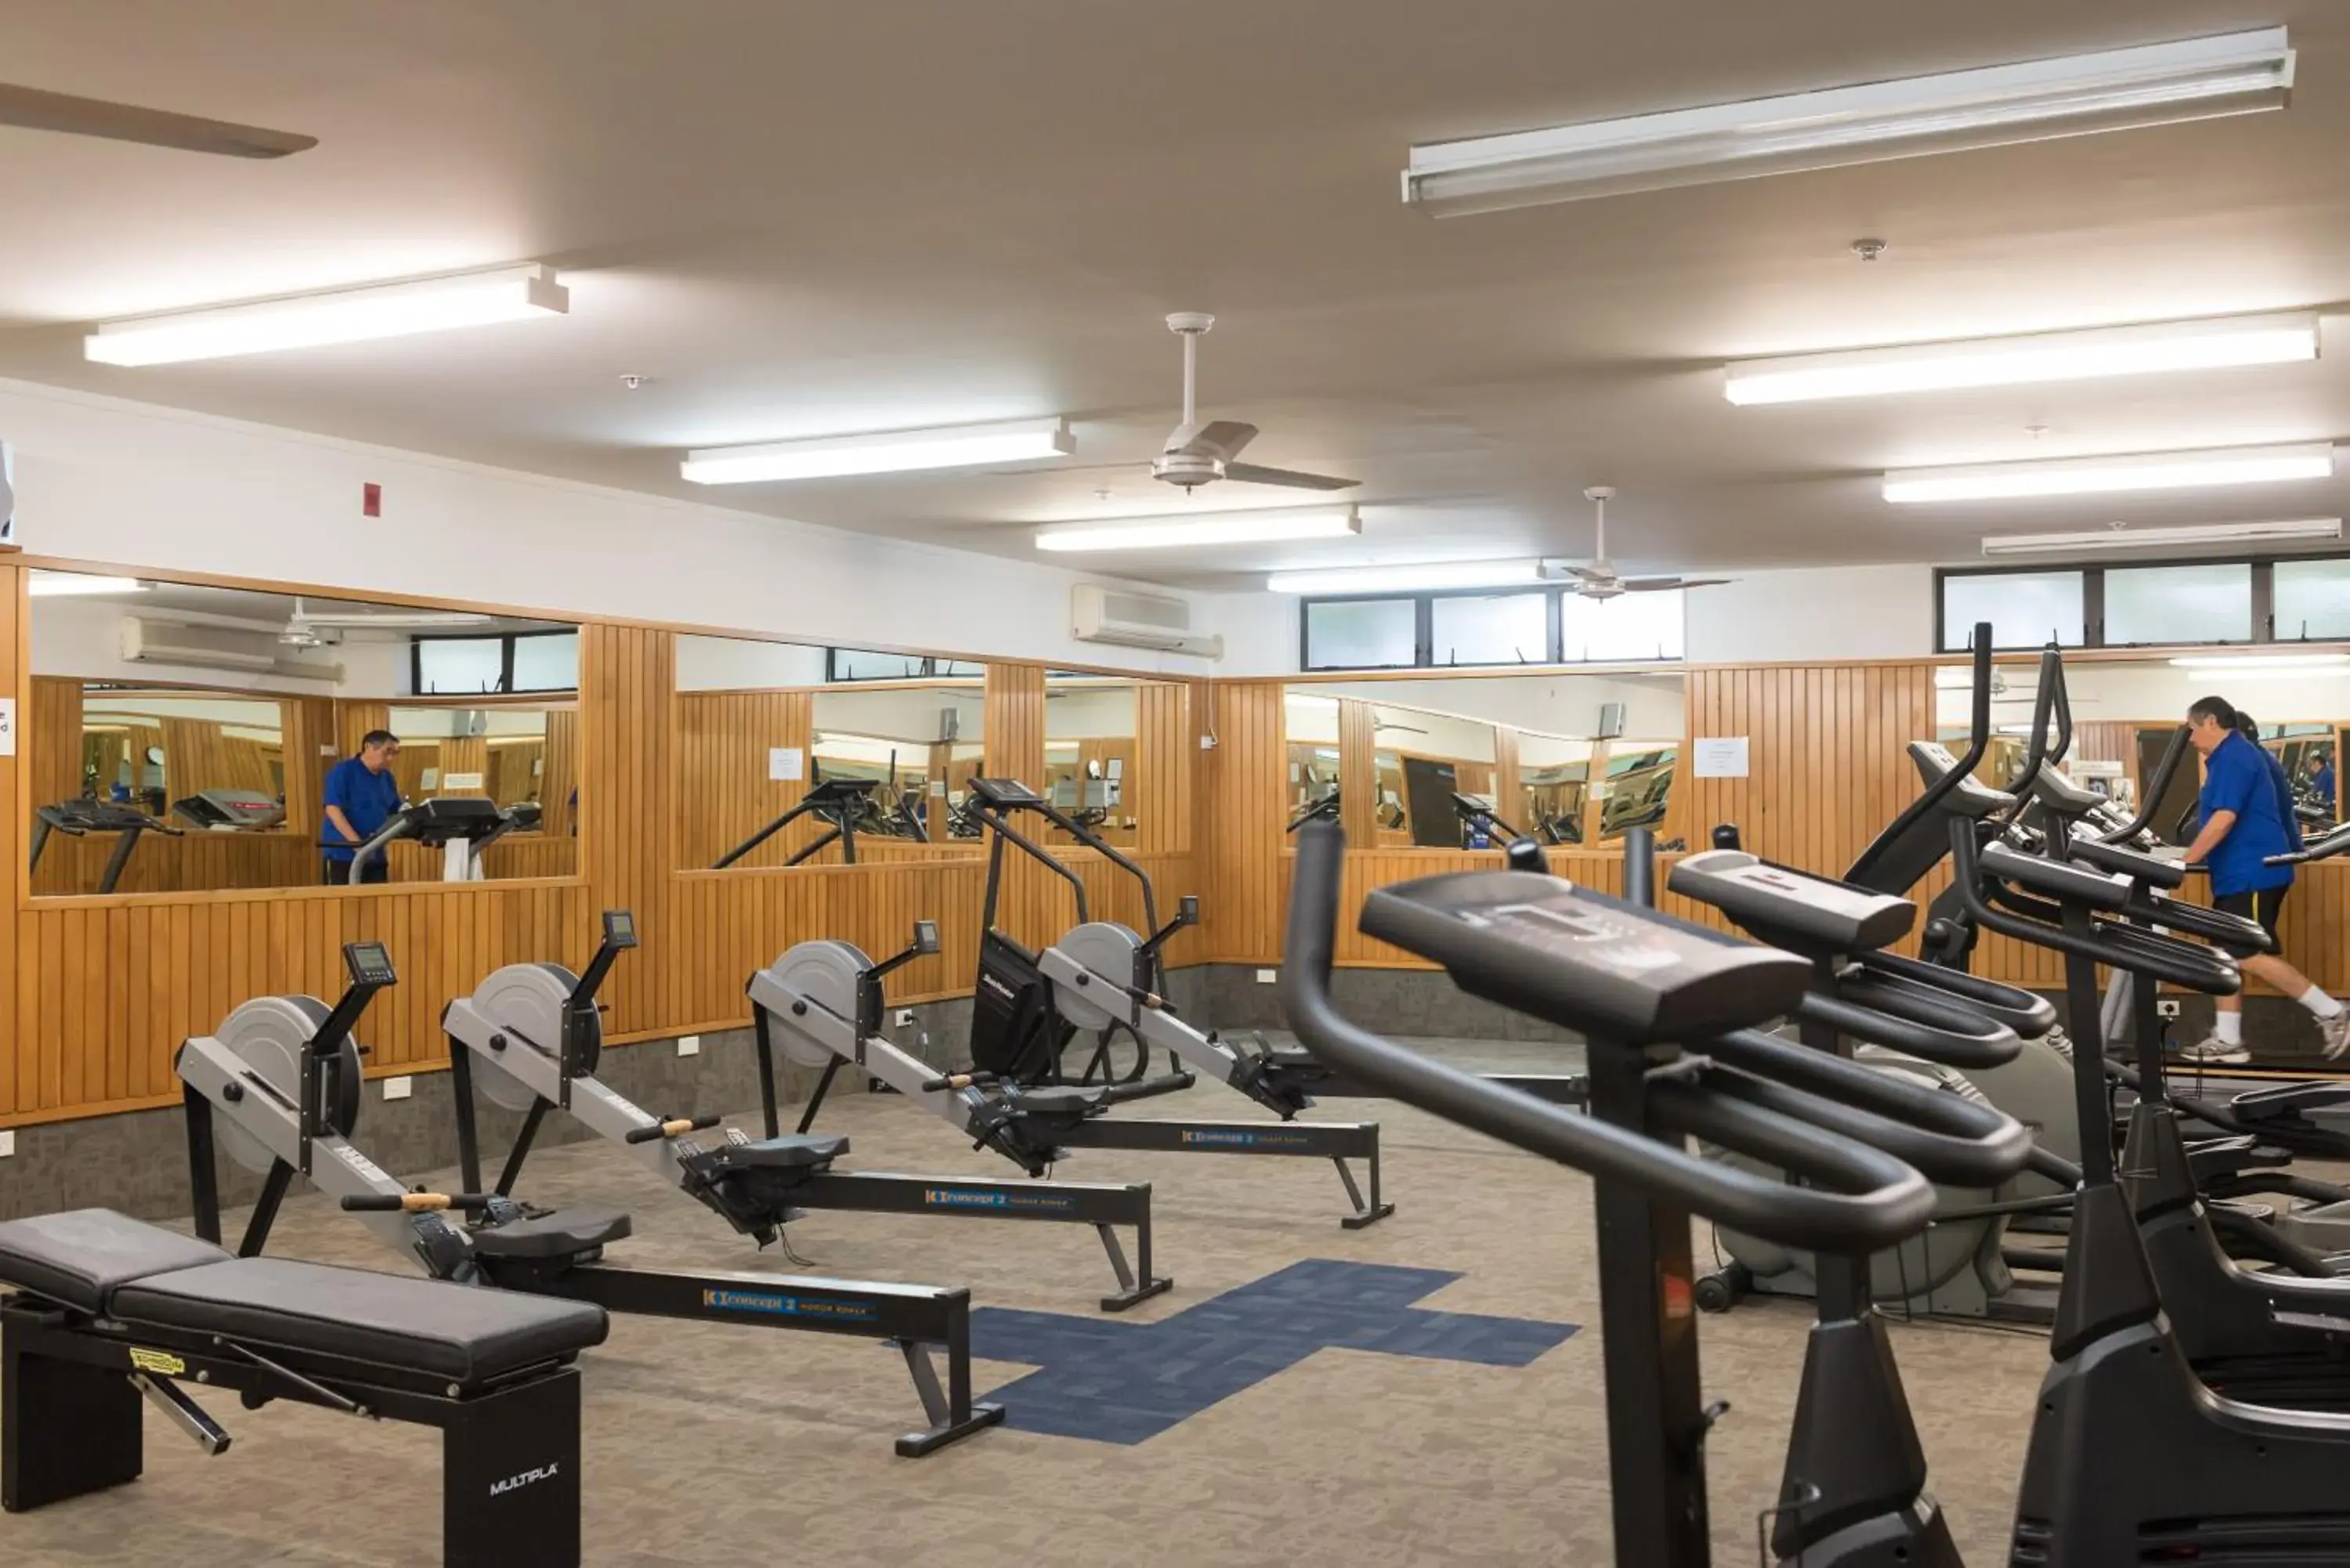 Fitness centre/facilities, Fitness Center/Facilities in Distinction Hamilton Hotel & Conference Centre